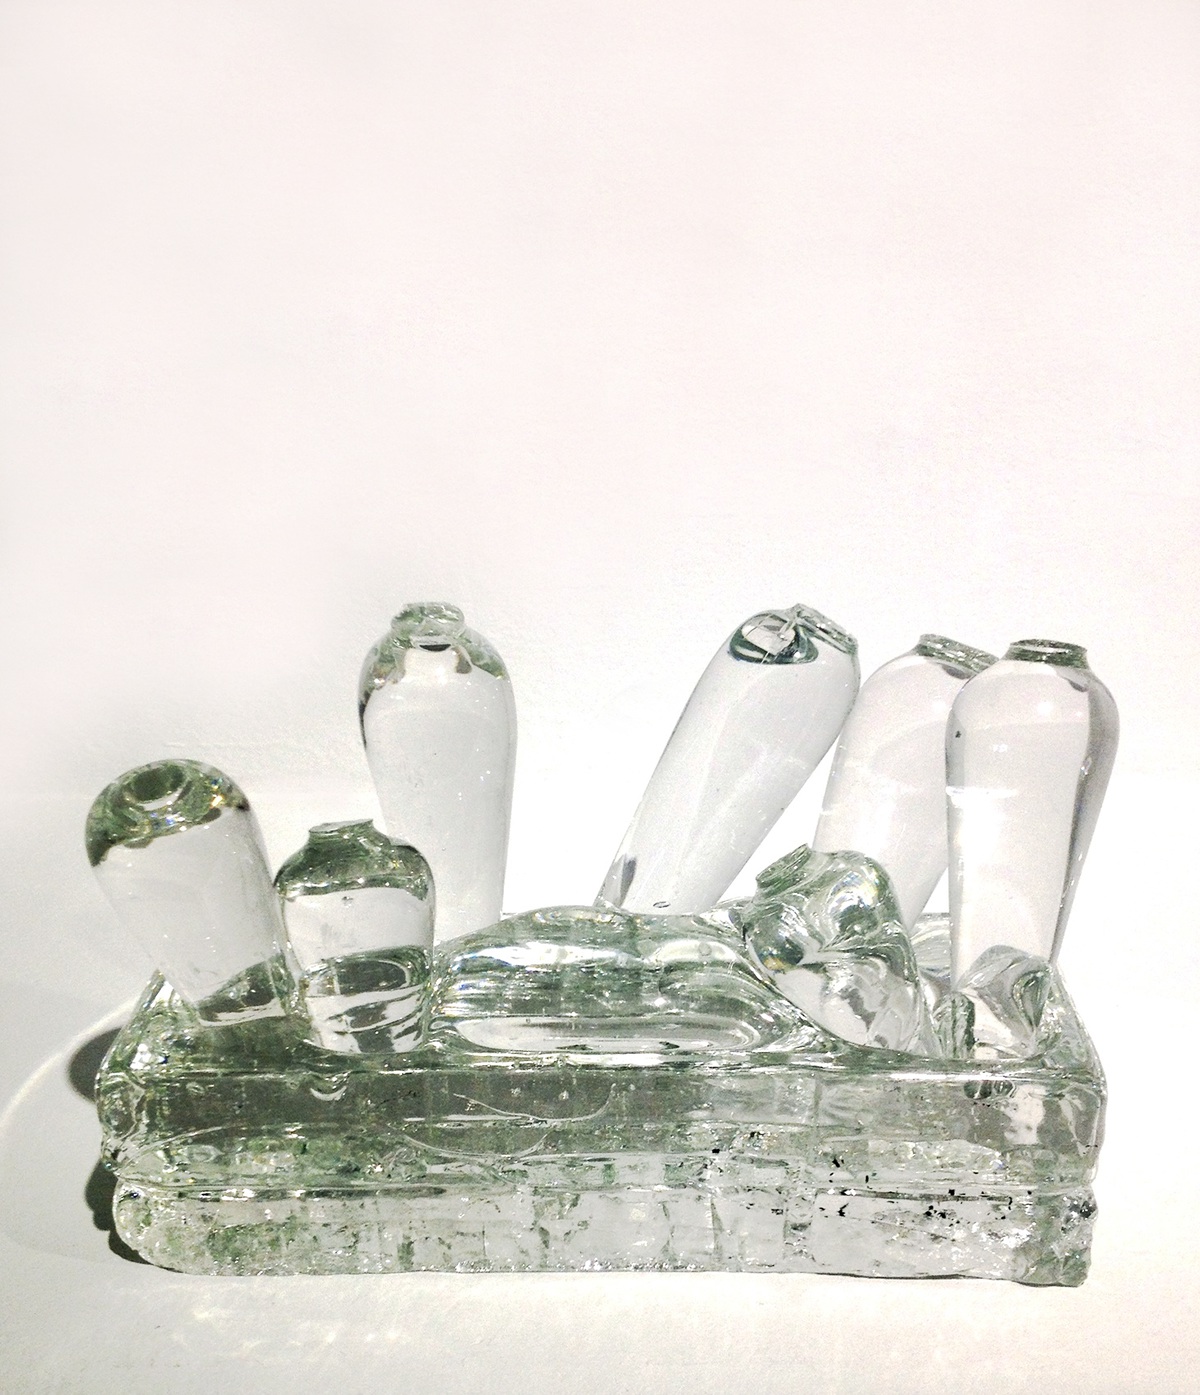 cone split hold Penetrate glass Embrace glacier Pierce sculpture risd plywood